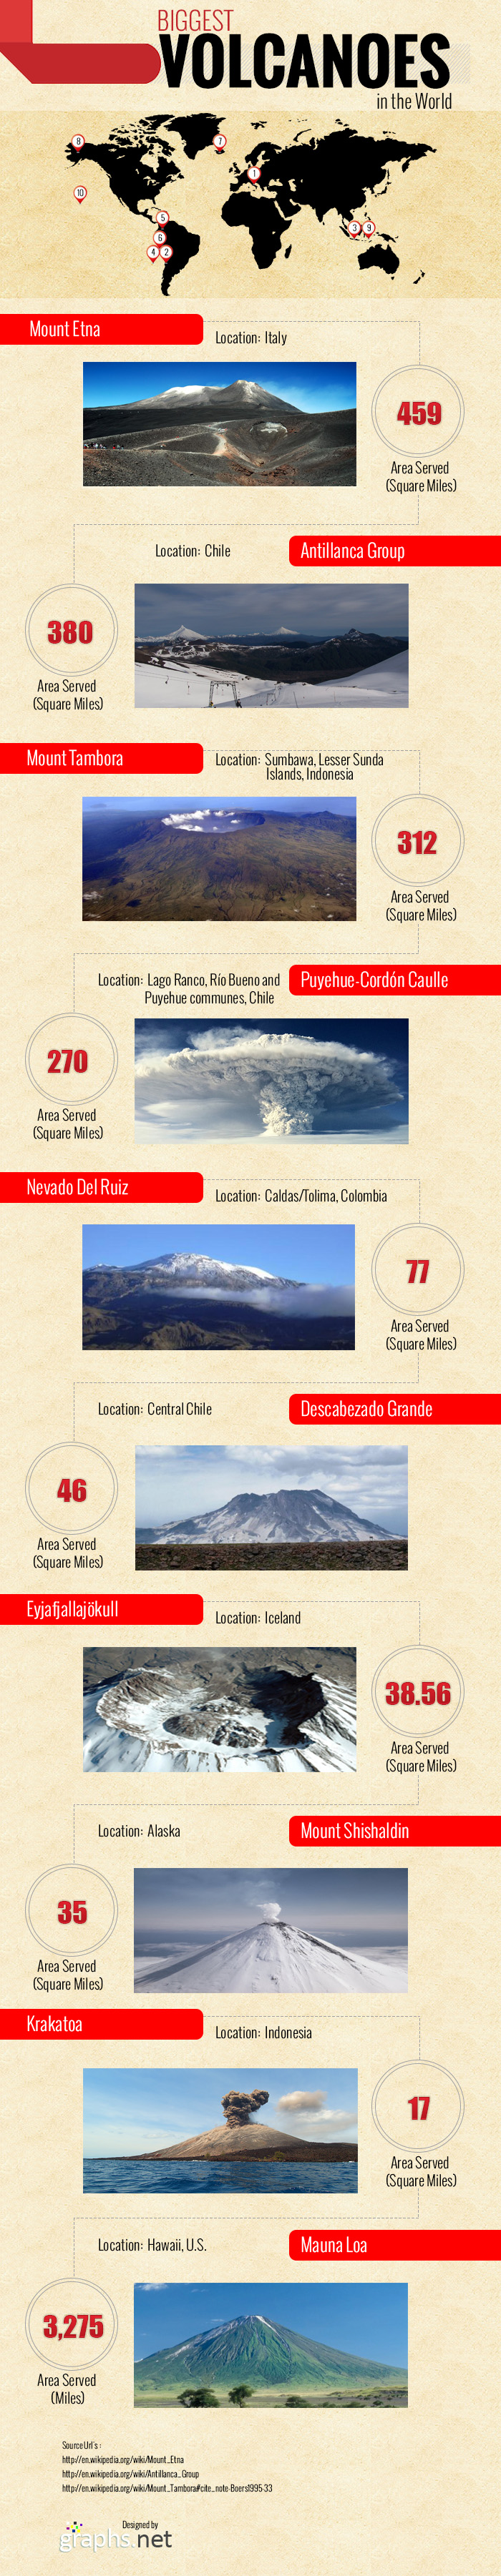 Biggest Volcanoes in the World 